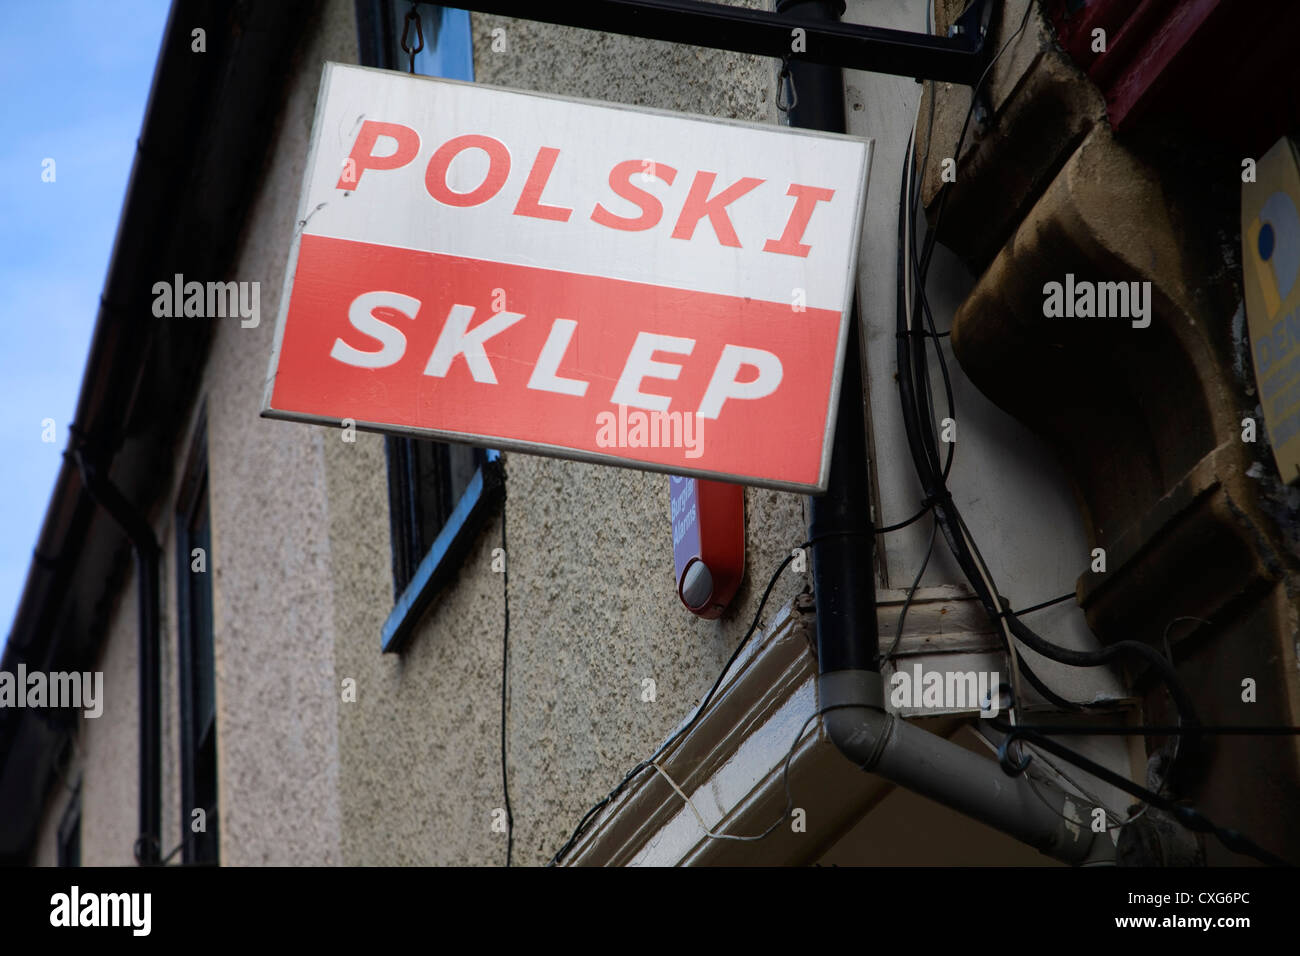 Polski Sklep Polish shop sign Stock Photo